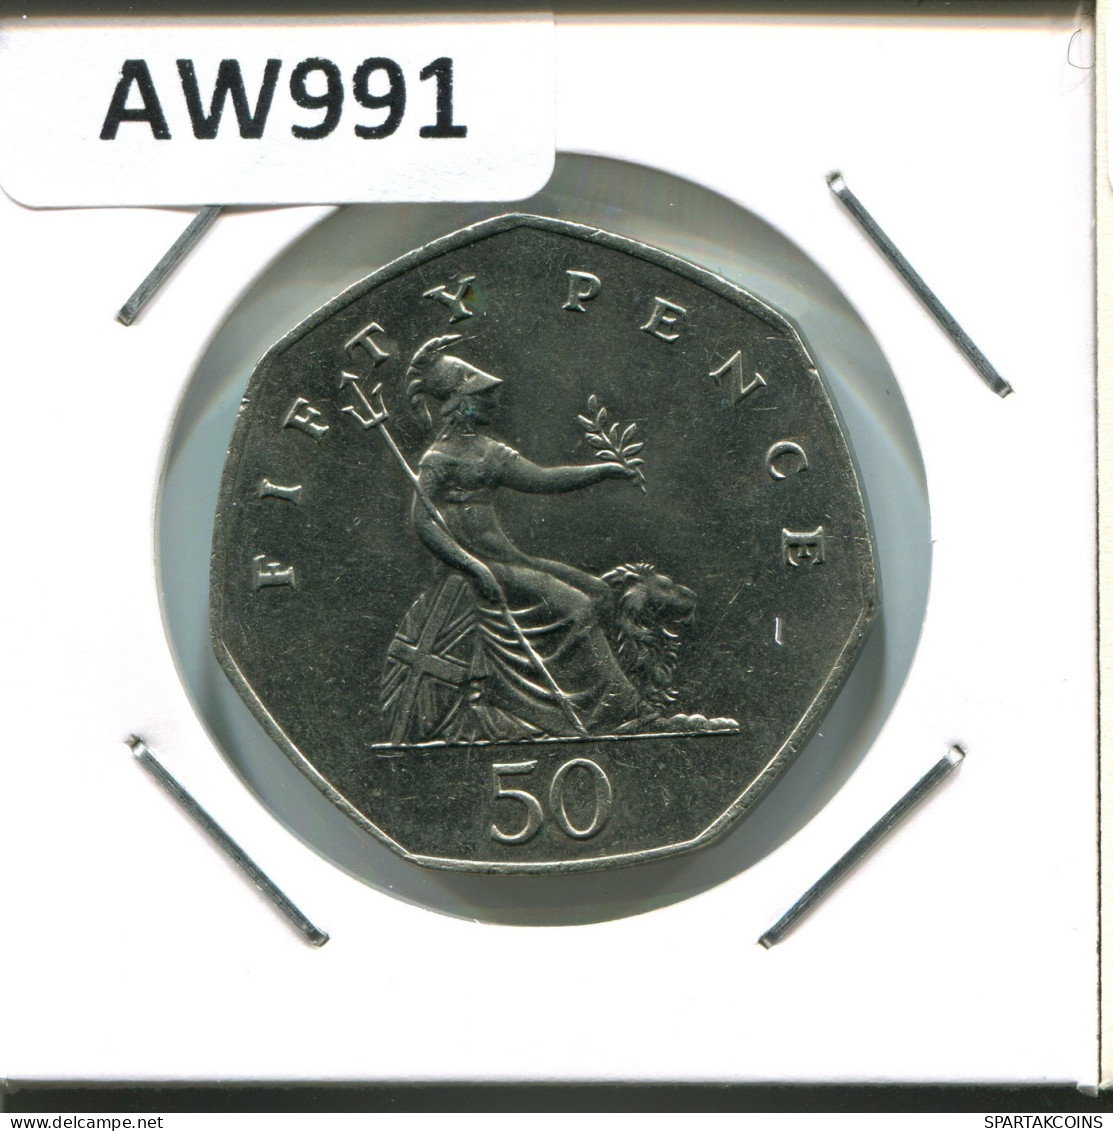 50 PENCE 1982 UK GROßBRITANNIEN GREAT BRITAIN Münze #AW991.D.A - 50 Pence